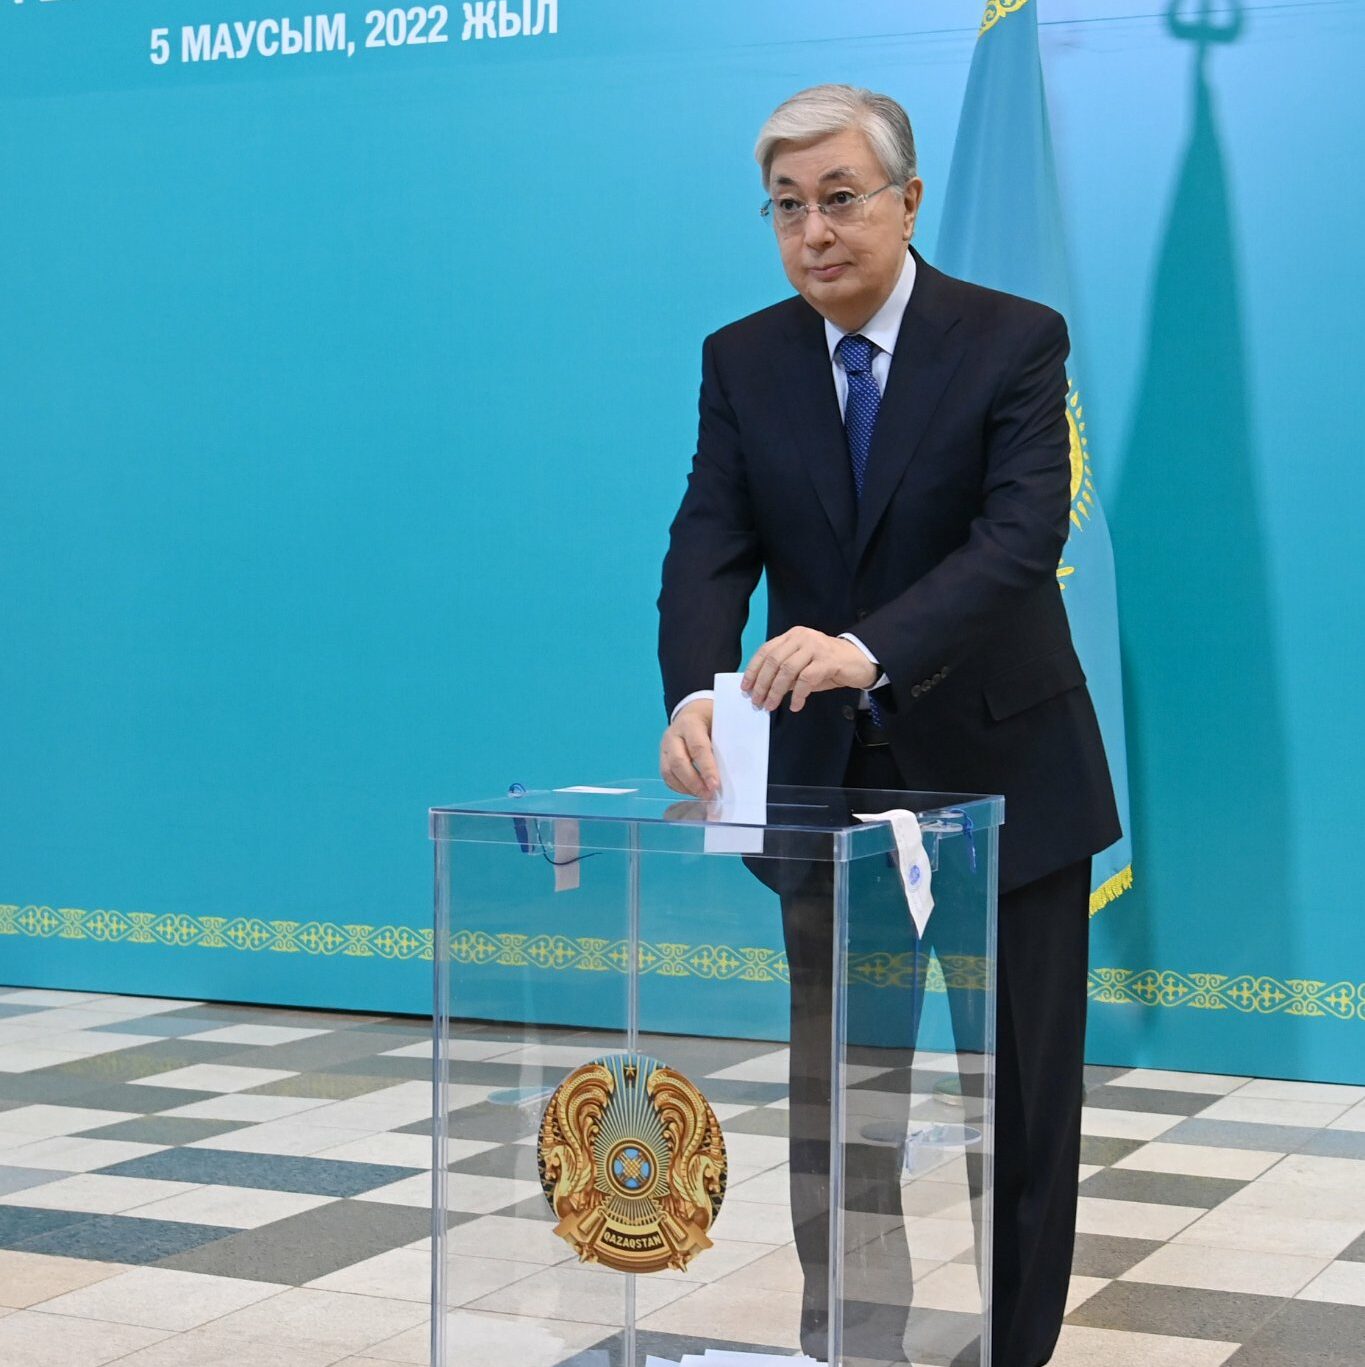 Президент Казахстана Касым-Жомарт Токаев голосует на референдуме 5 июня 2022 года. Фото пресс-службы президента Казахстана.